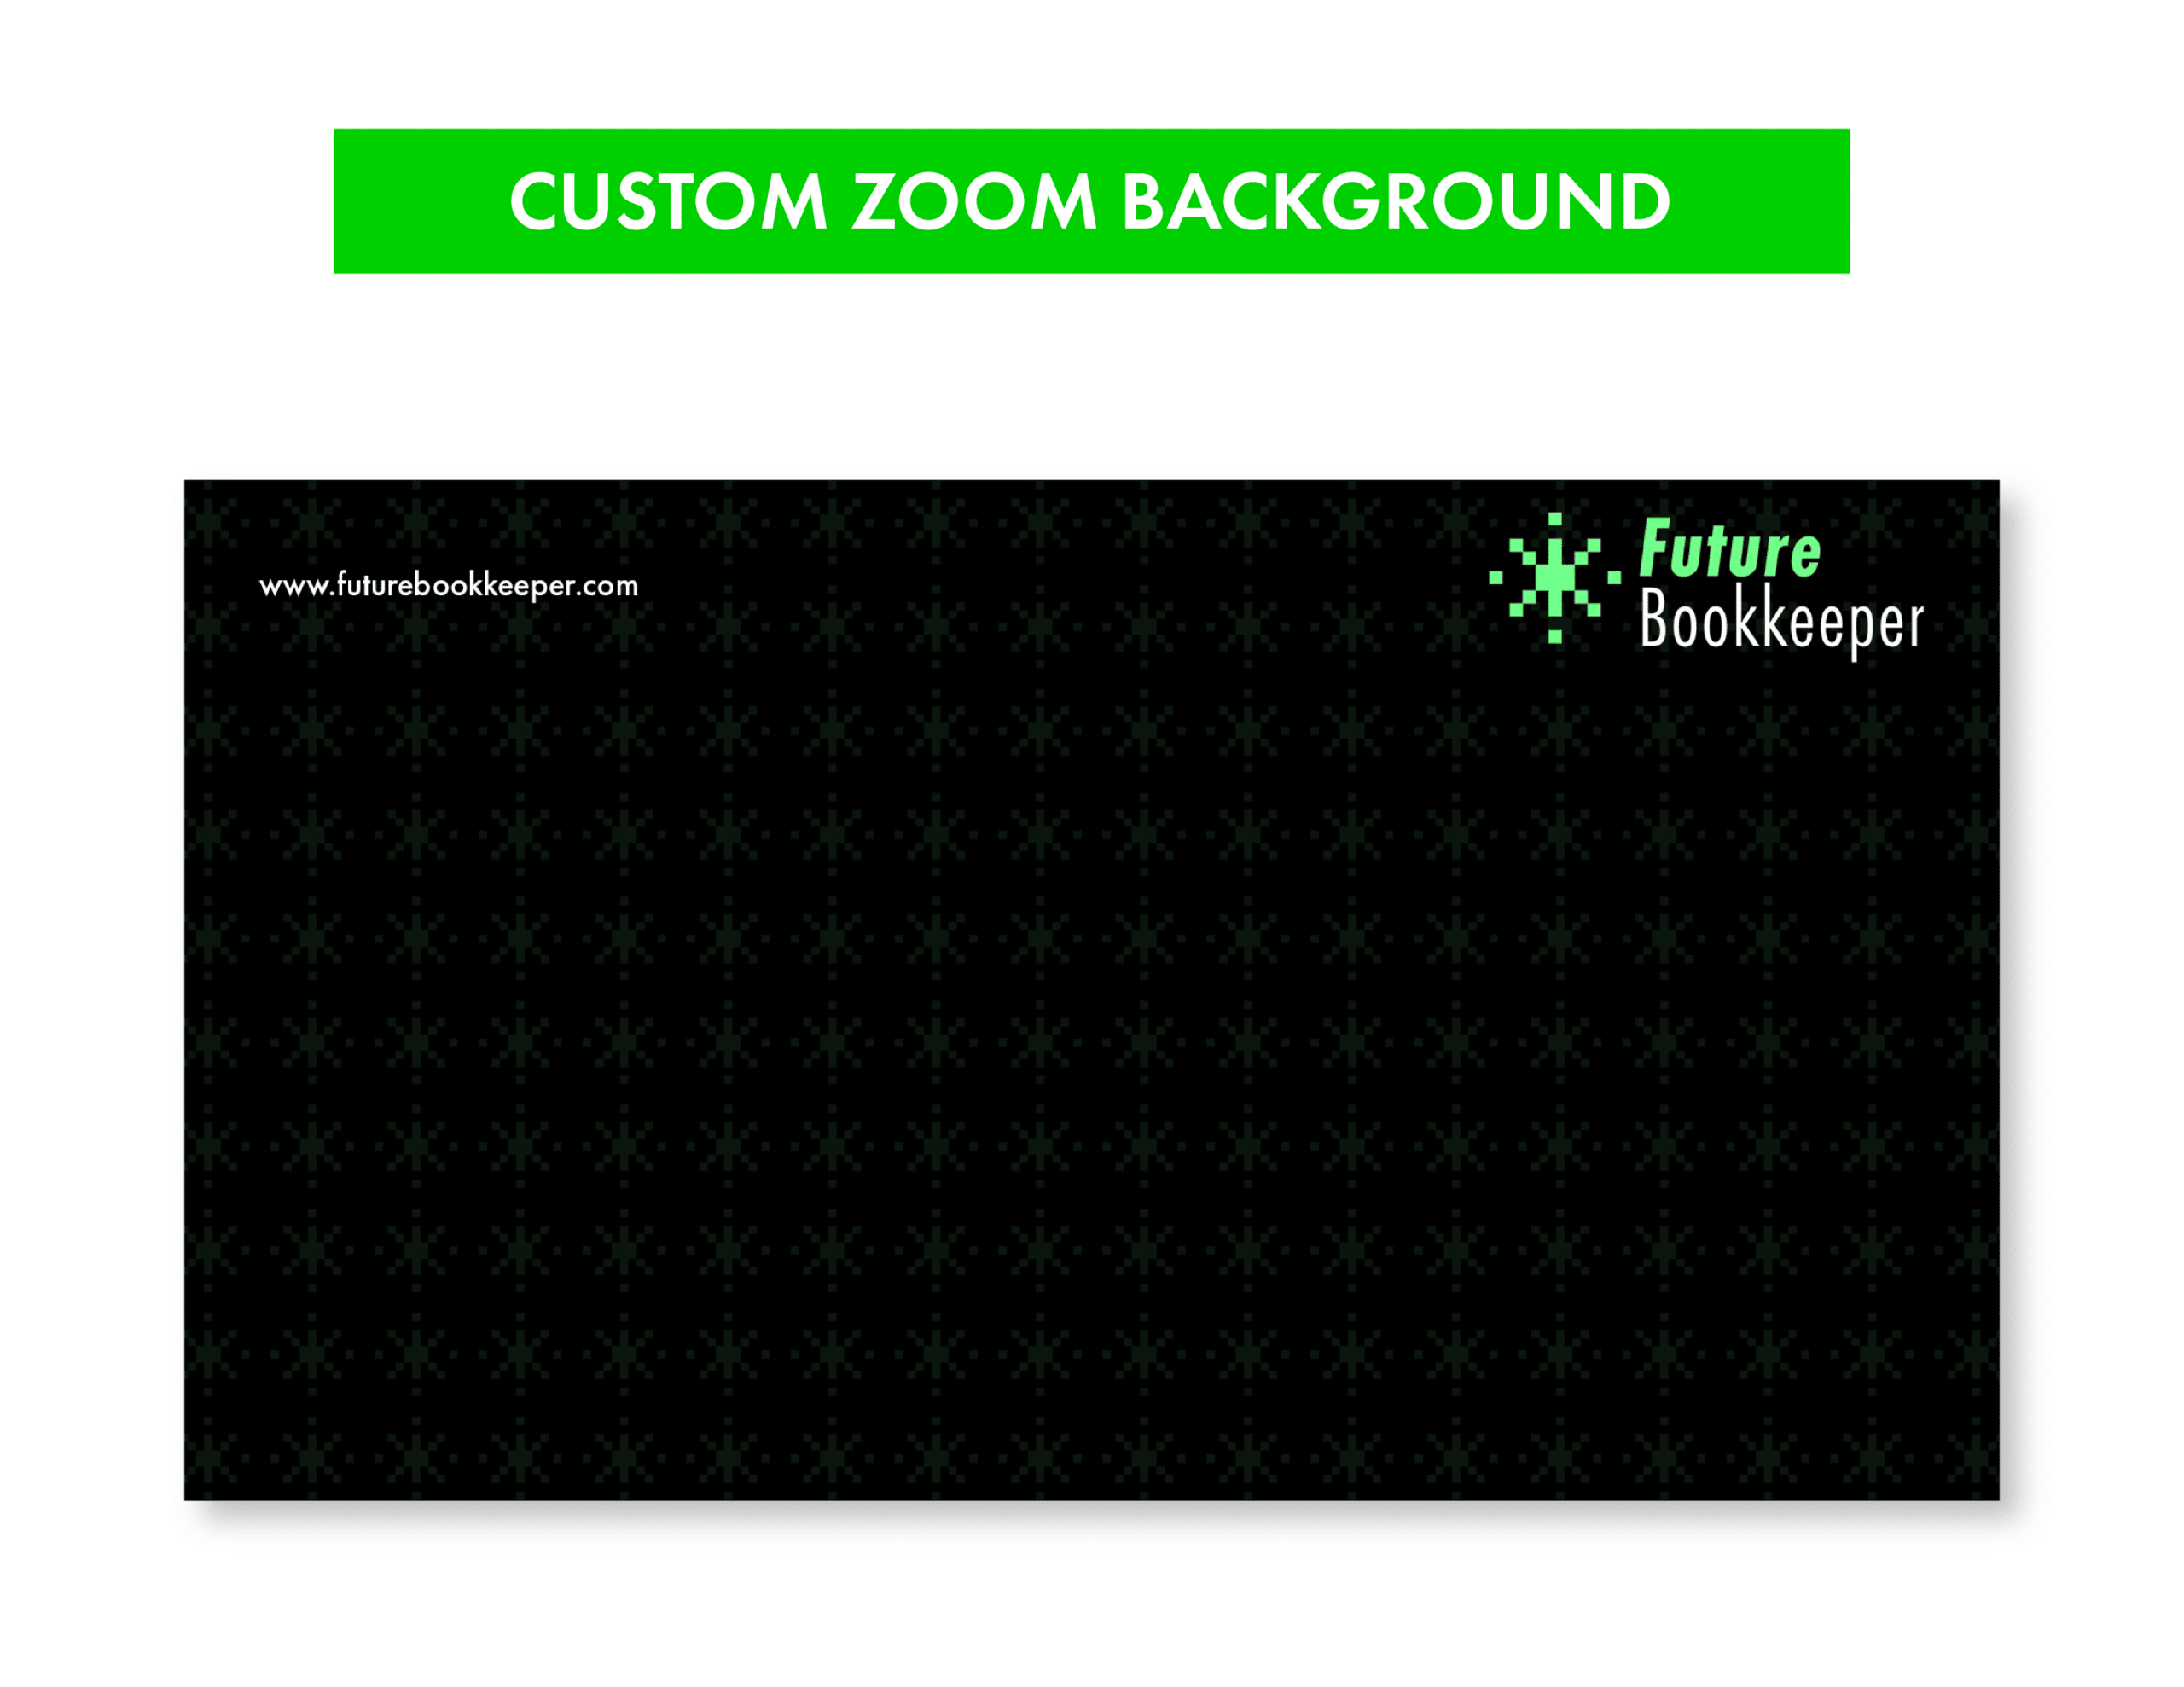 07Future__Custom Zoom Background